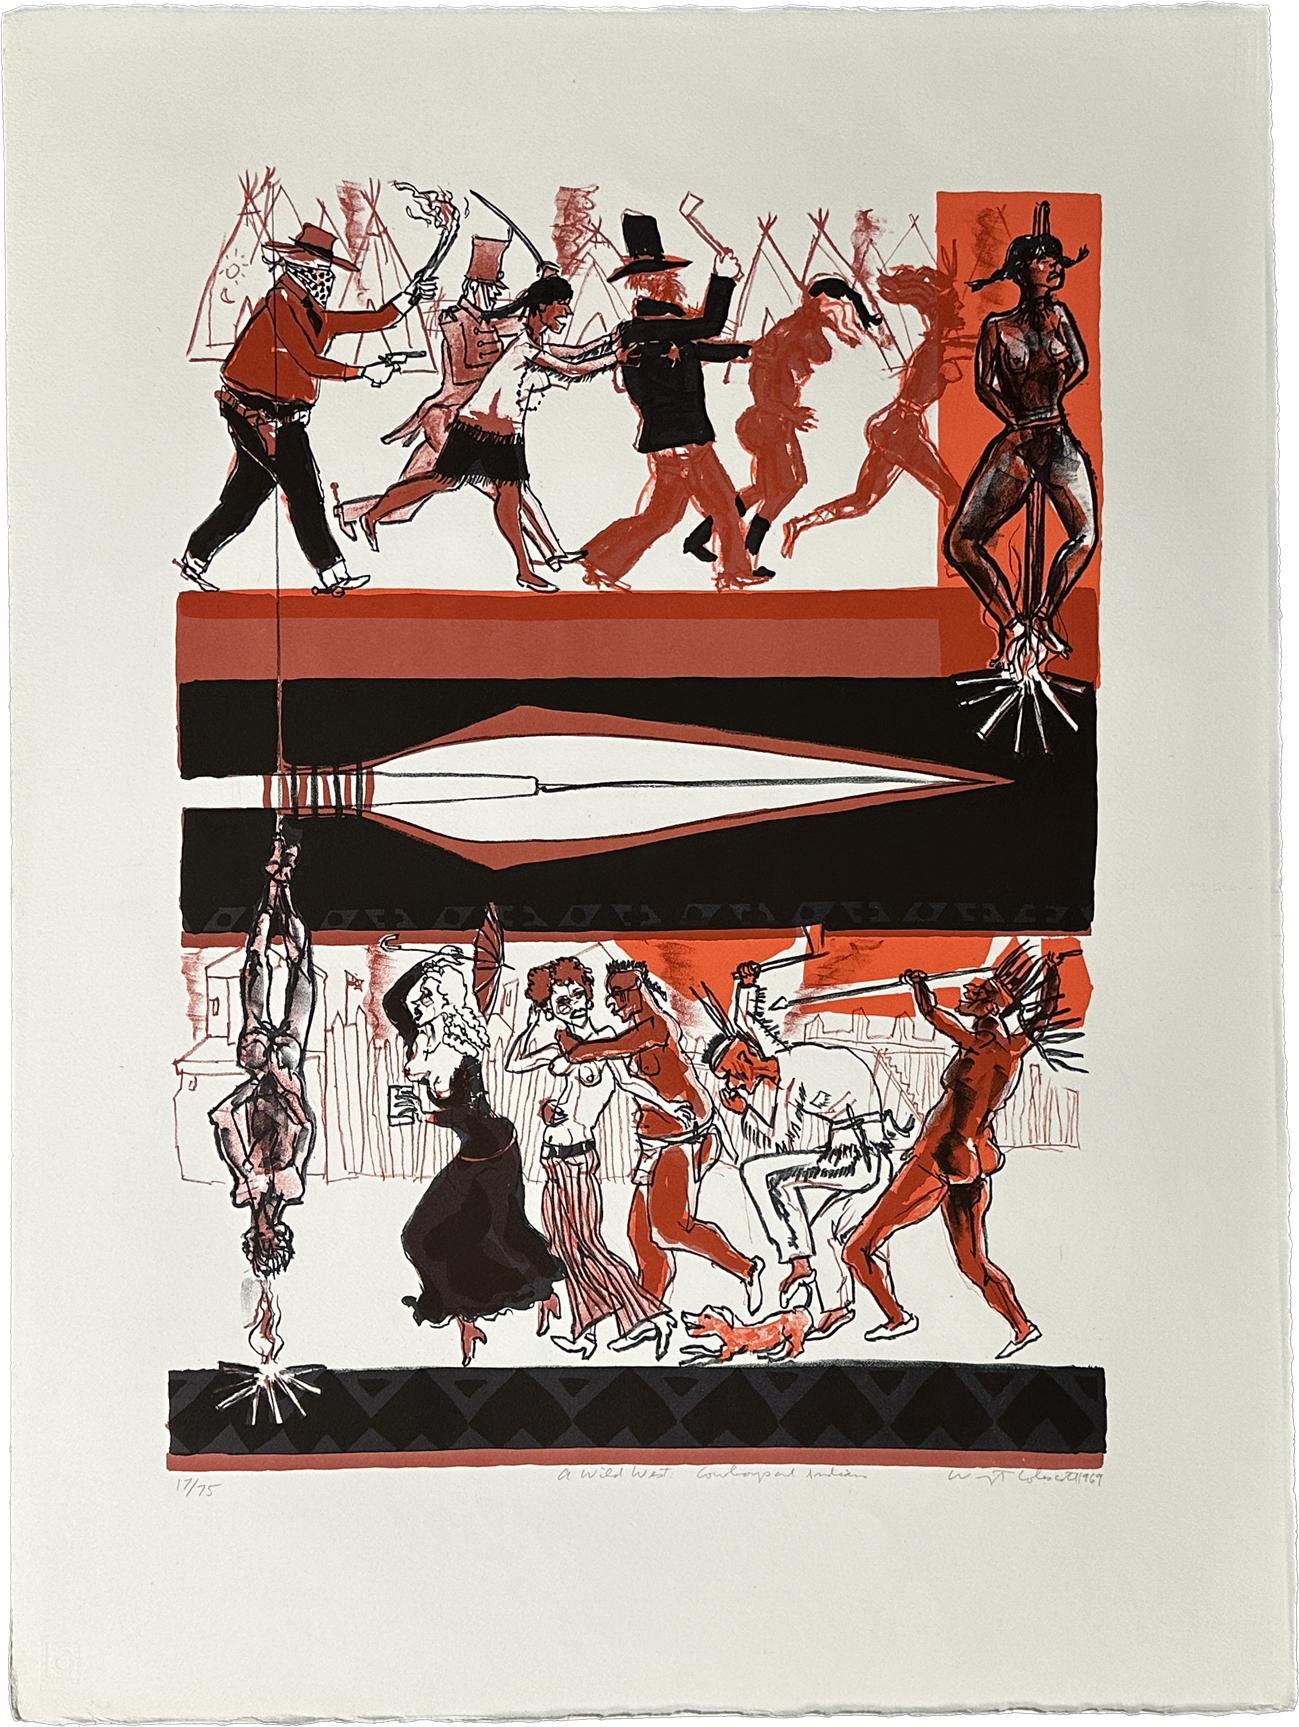 Warrington Colescott Figurative Print - Cowboys and Indians 1969 A Wild West  Signed Original Lithograph